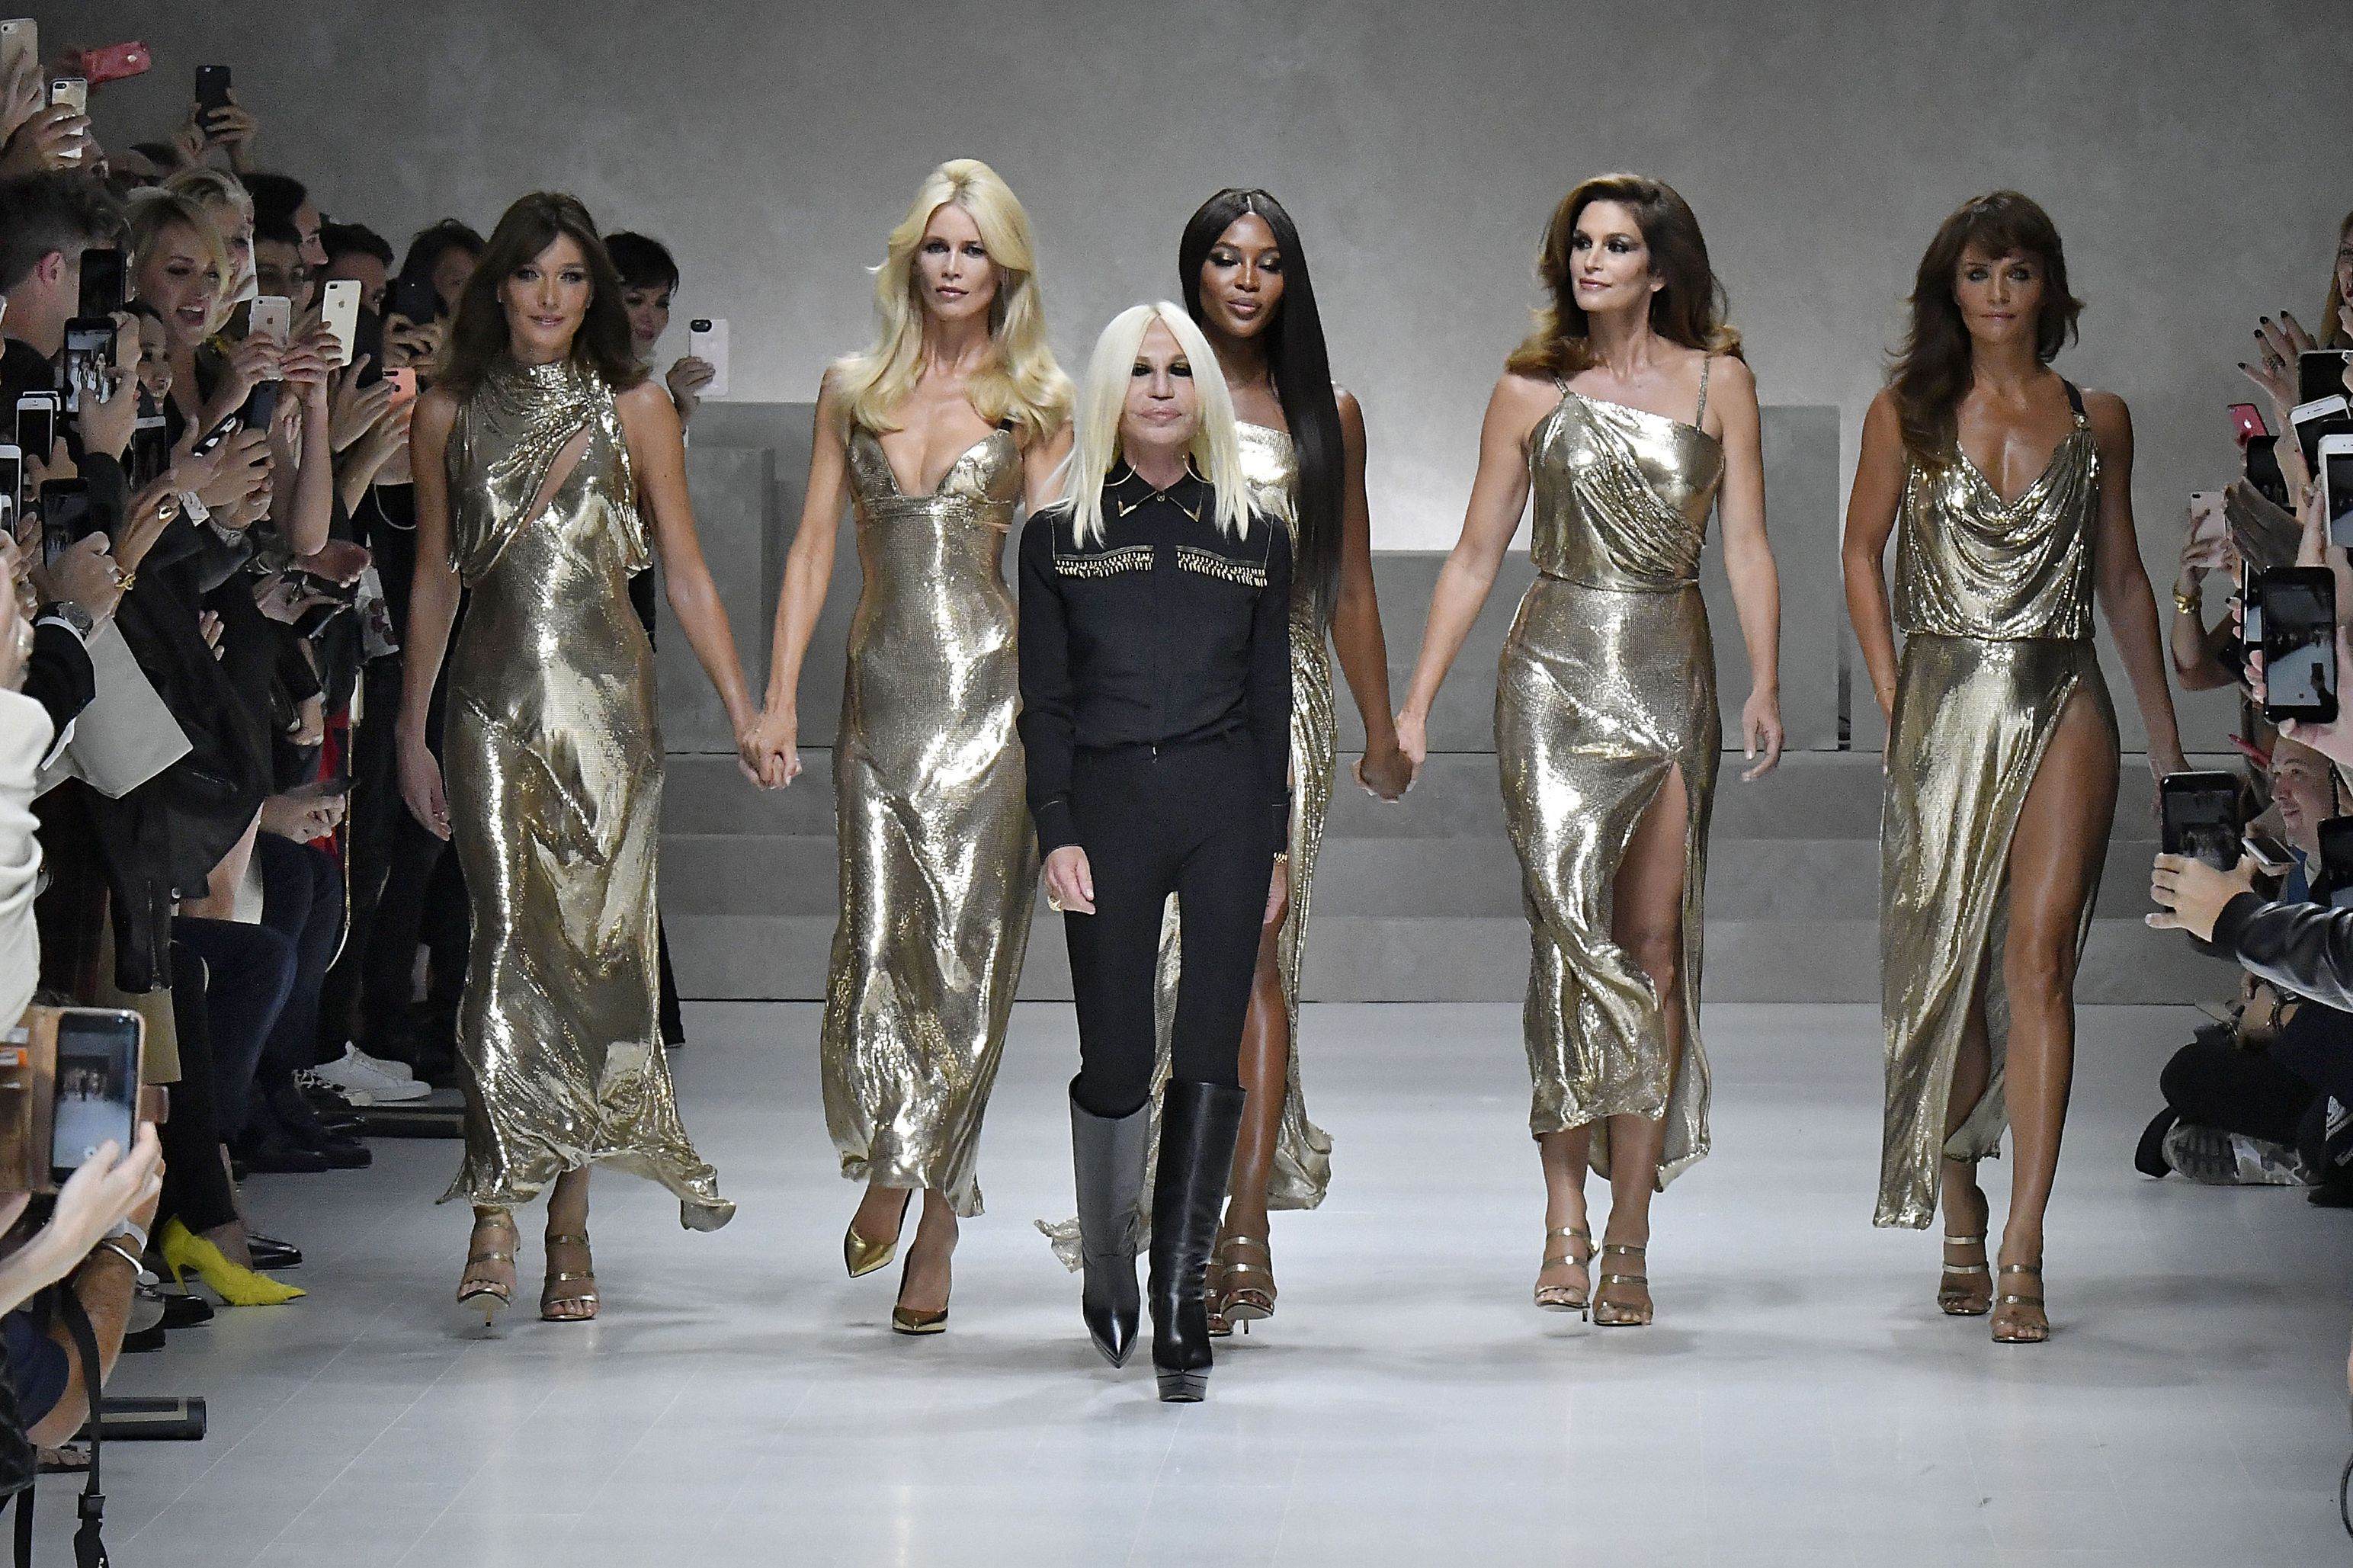 Michael Kors will reportedly buy Italian brand Versace